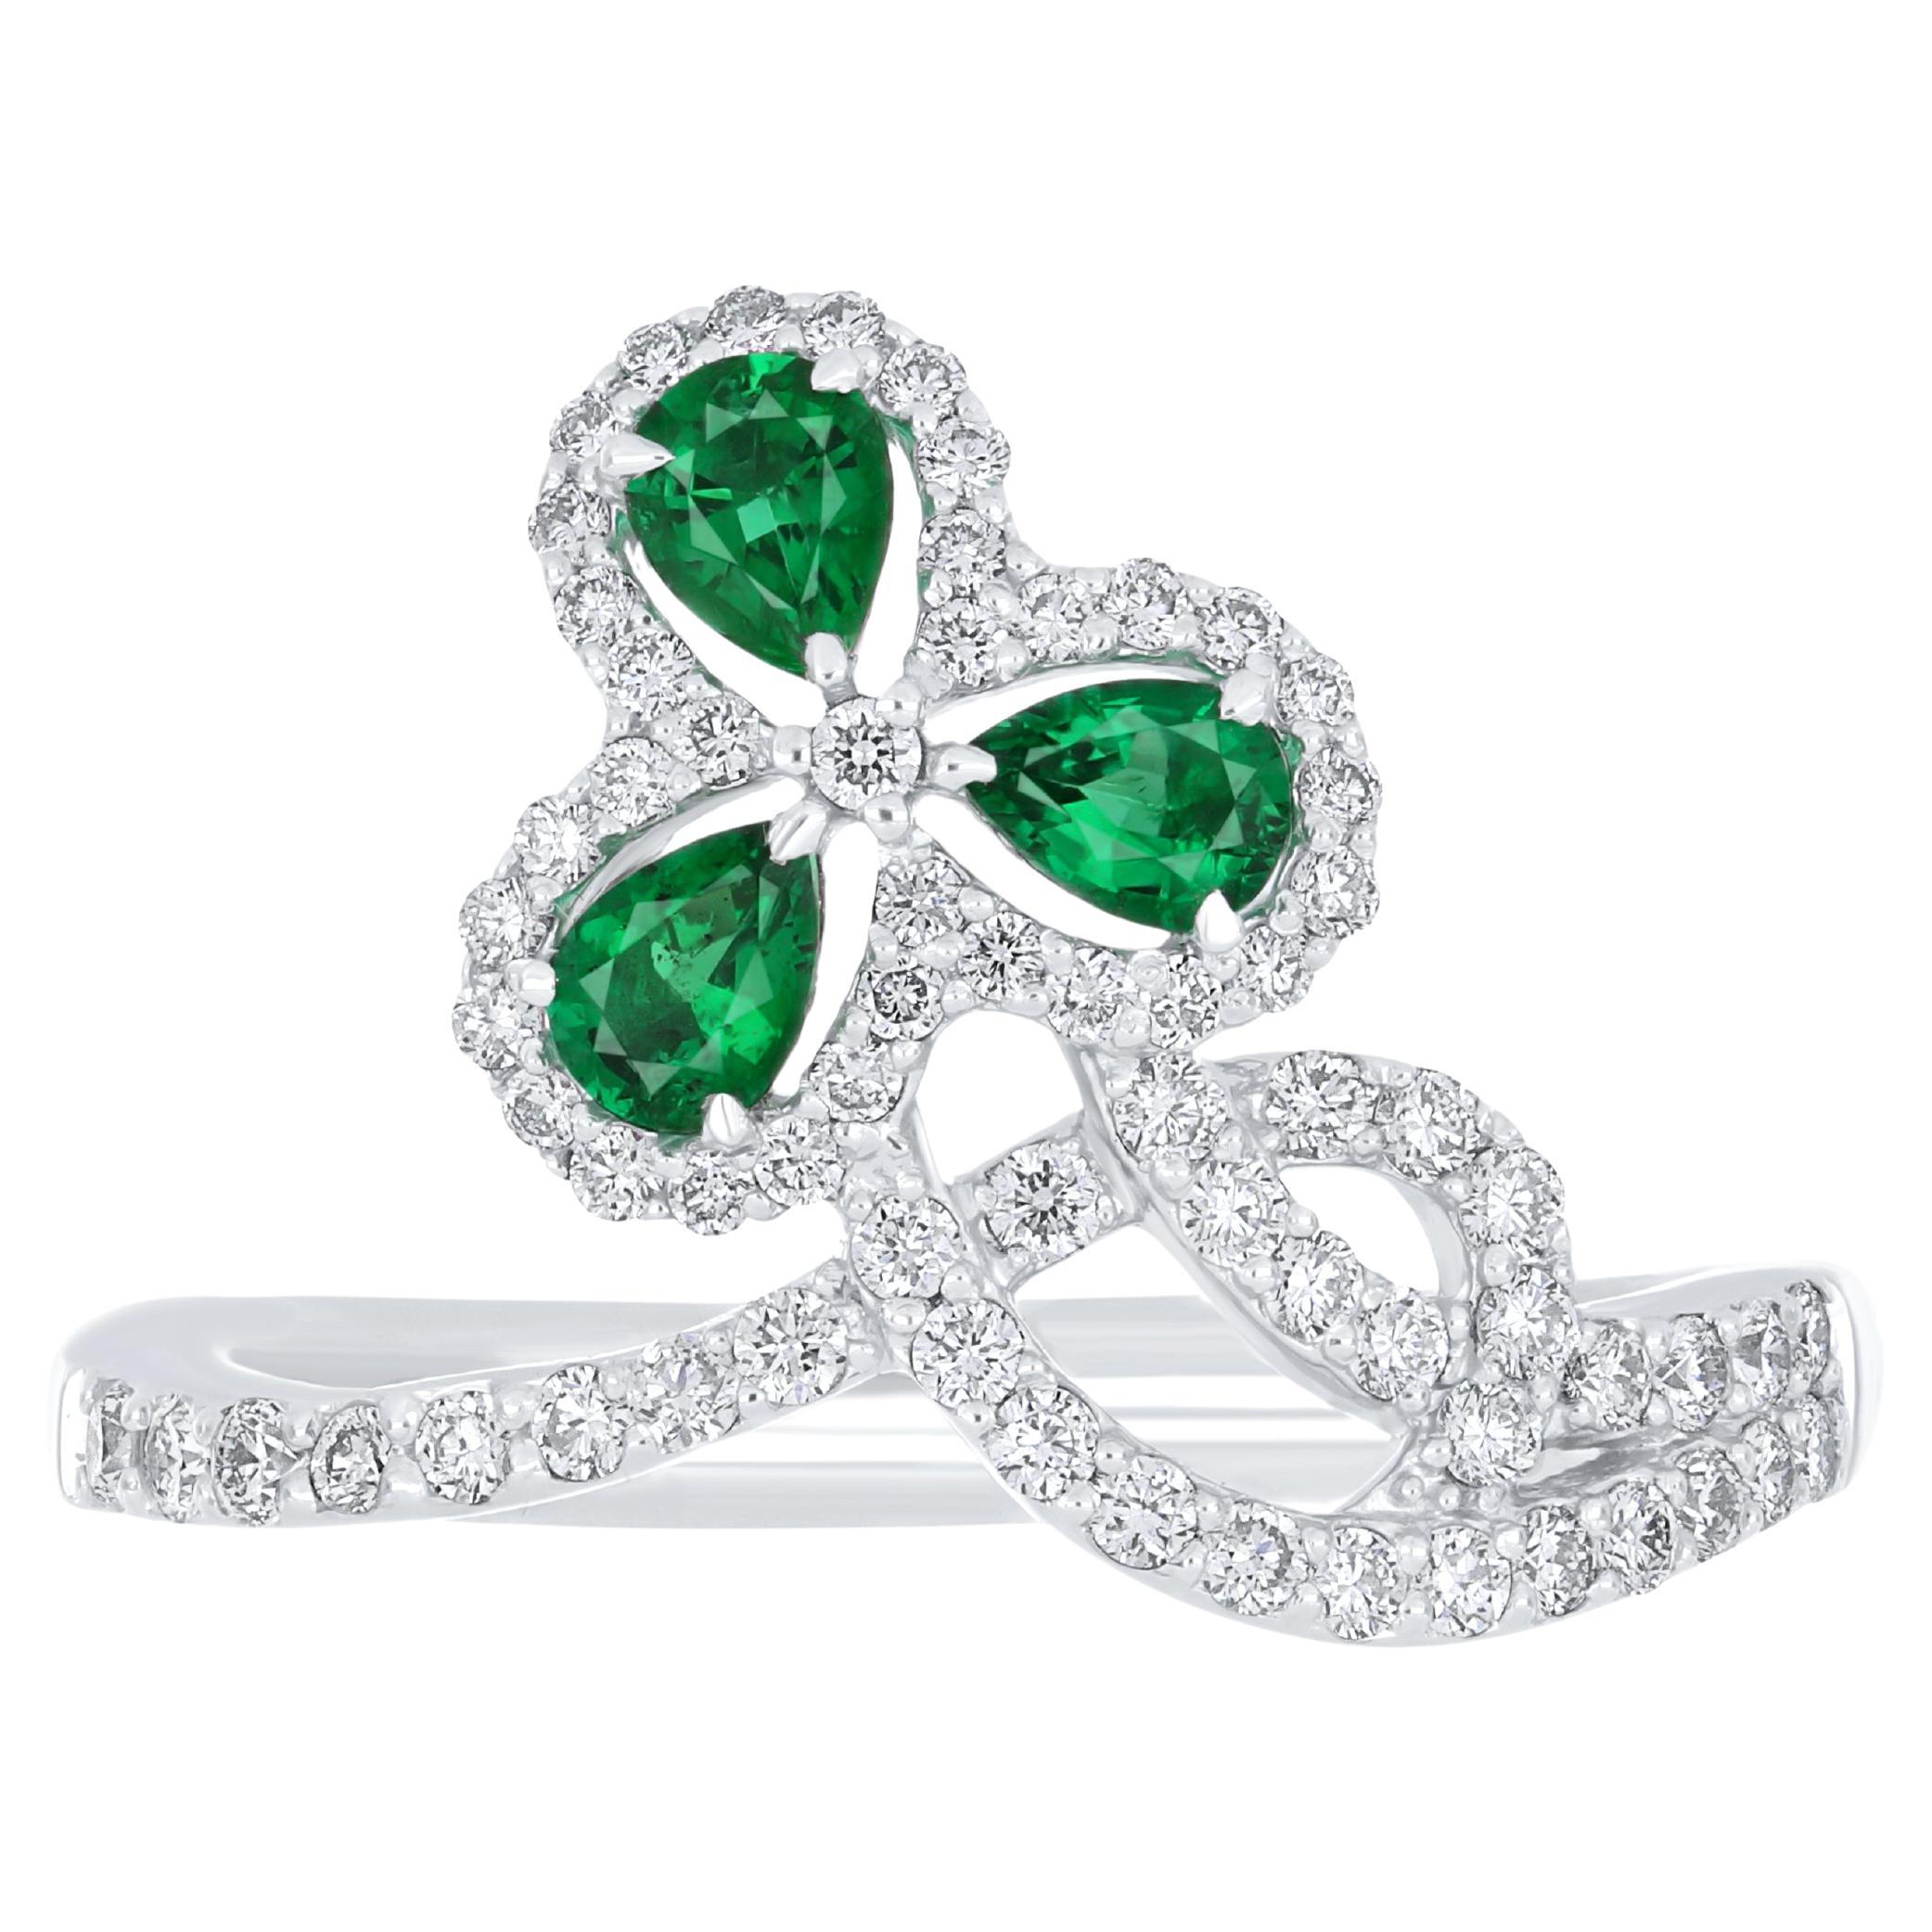 Emerald and Diamond Studded Ring 18 Karat White Gold jewelry handcraft Ring